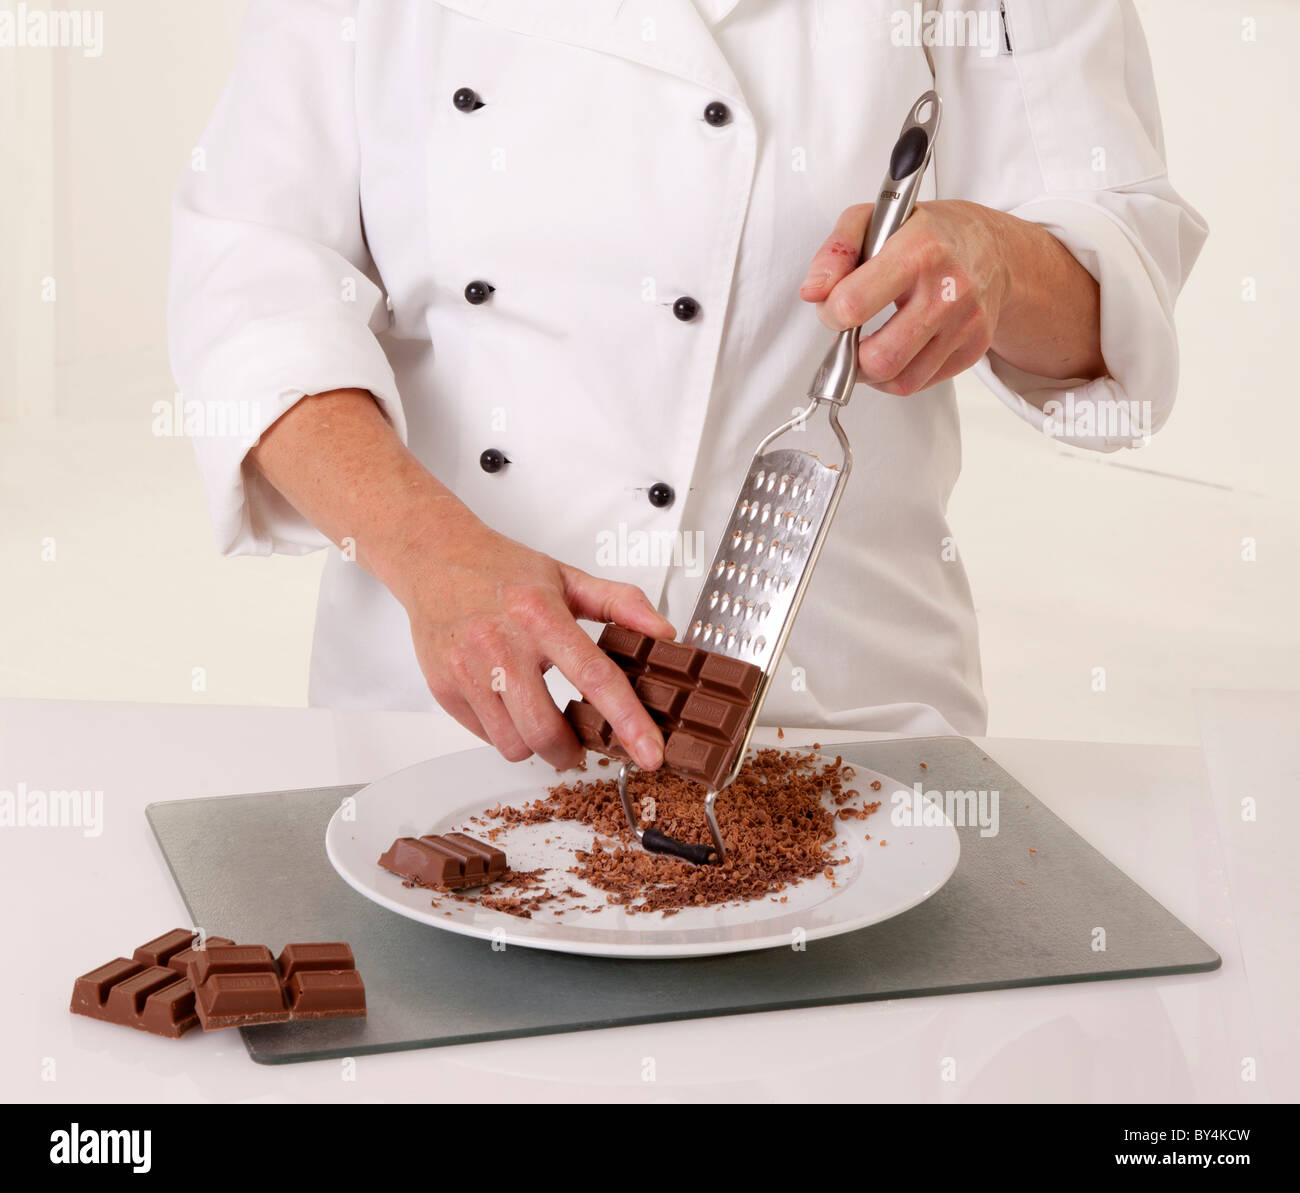 CHEF GRATING CHOCOLATE Stock Photo